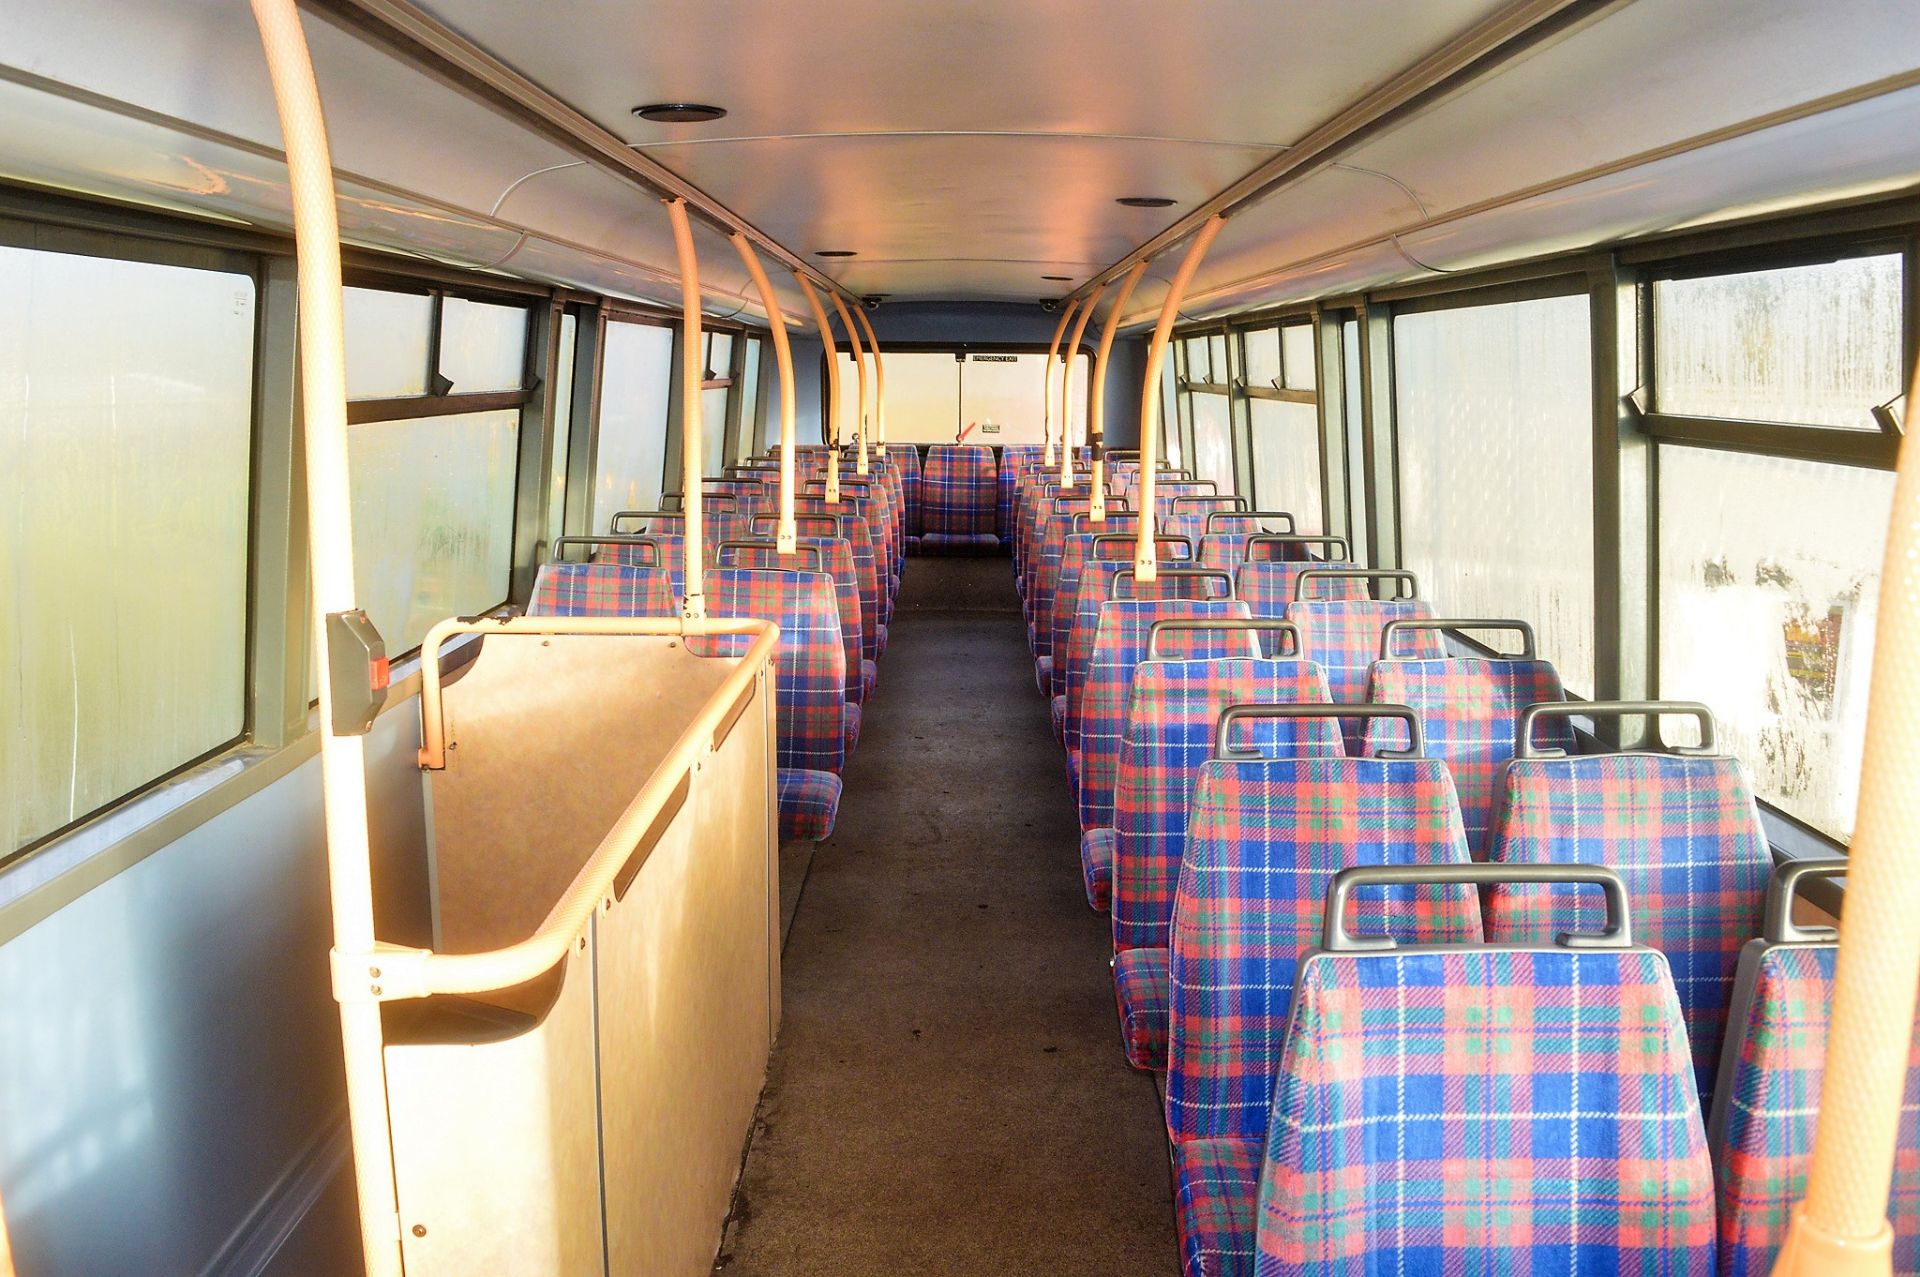 Alexander Dennis Trident Plaxton President 75 seat double deck service bus Registration Number: V533 - Image 9 of 11